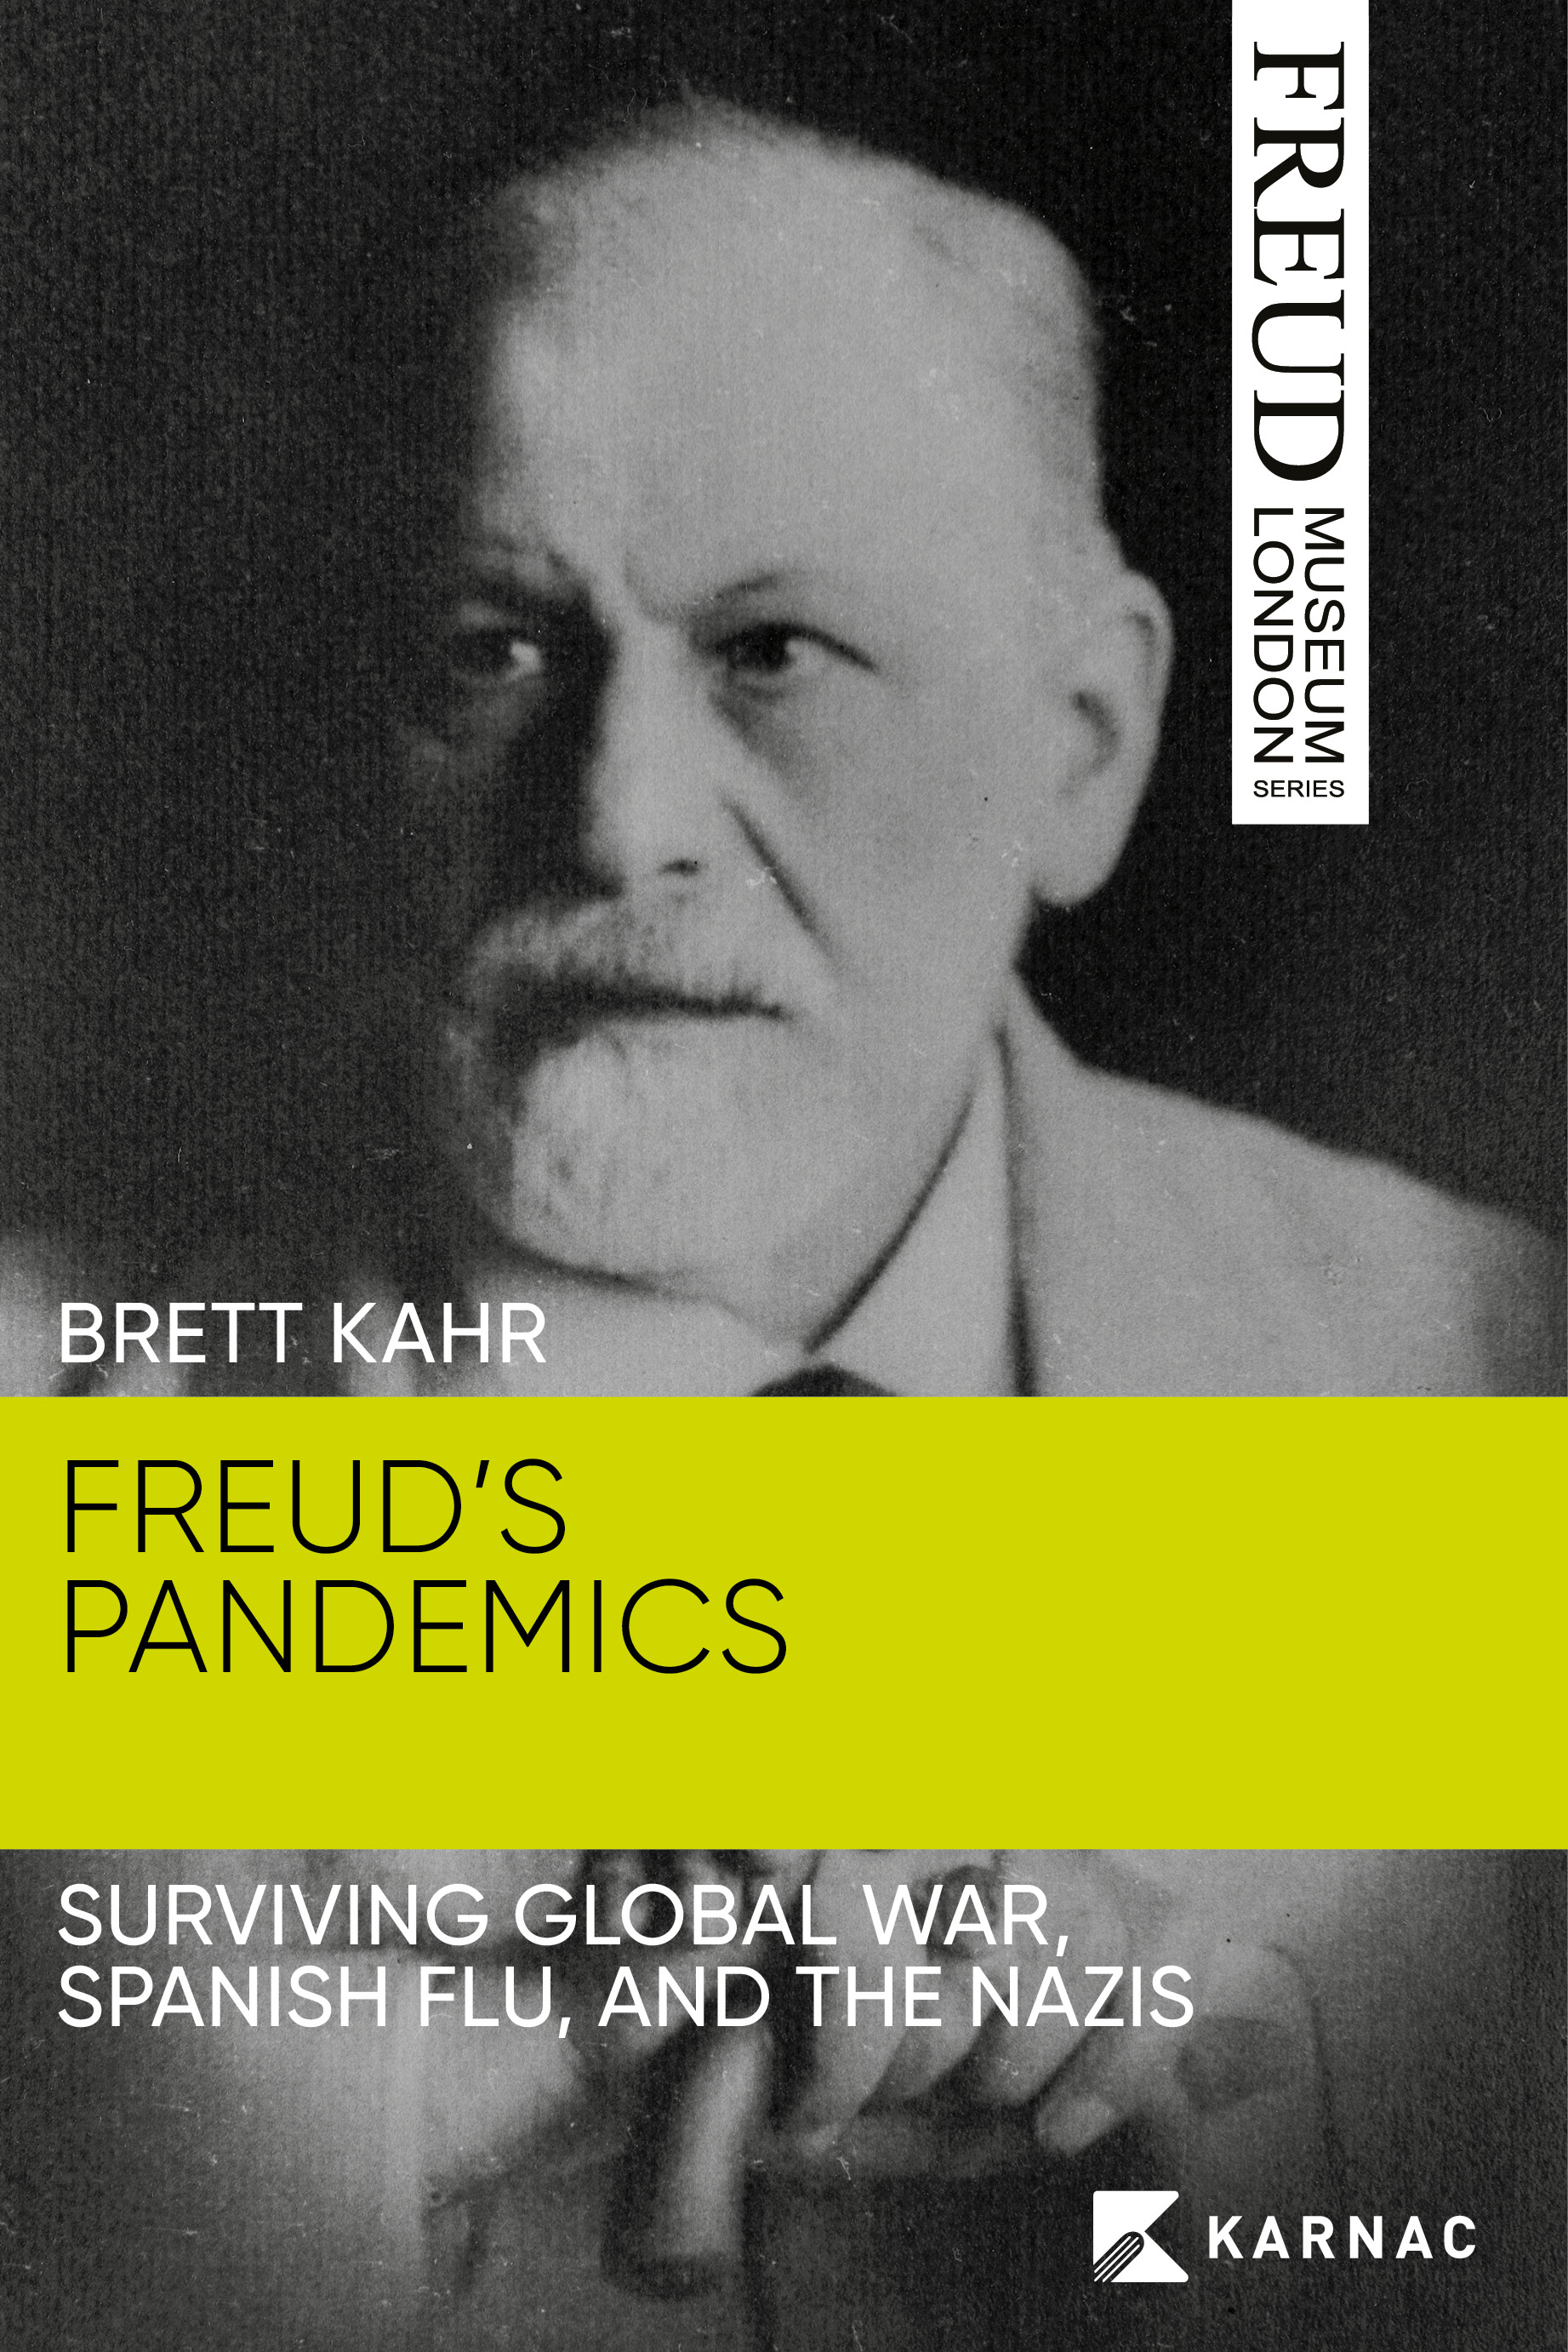 Freud's Pandemics: Surviving Global War, Spanish Flu and the Nazis